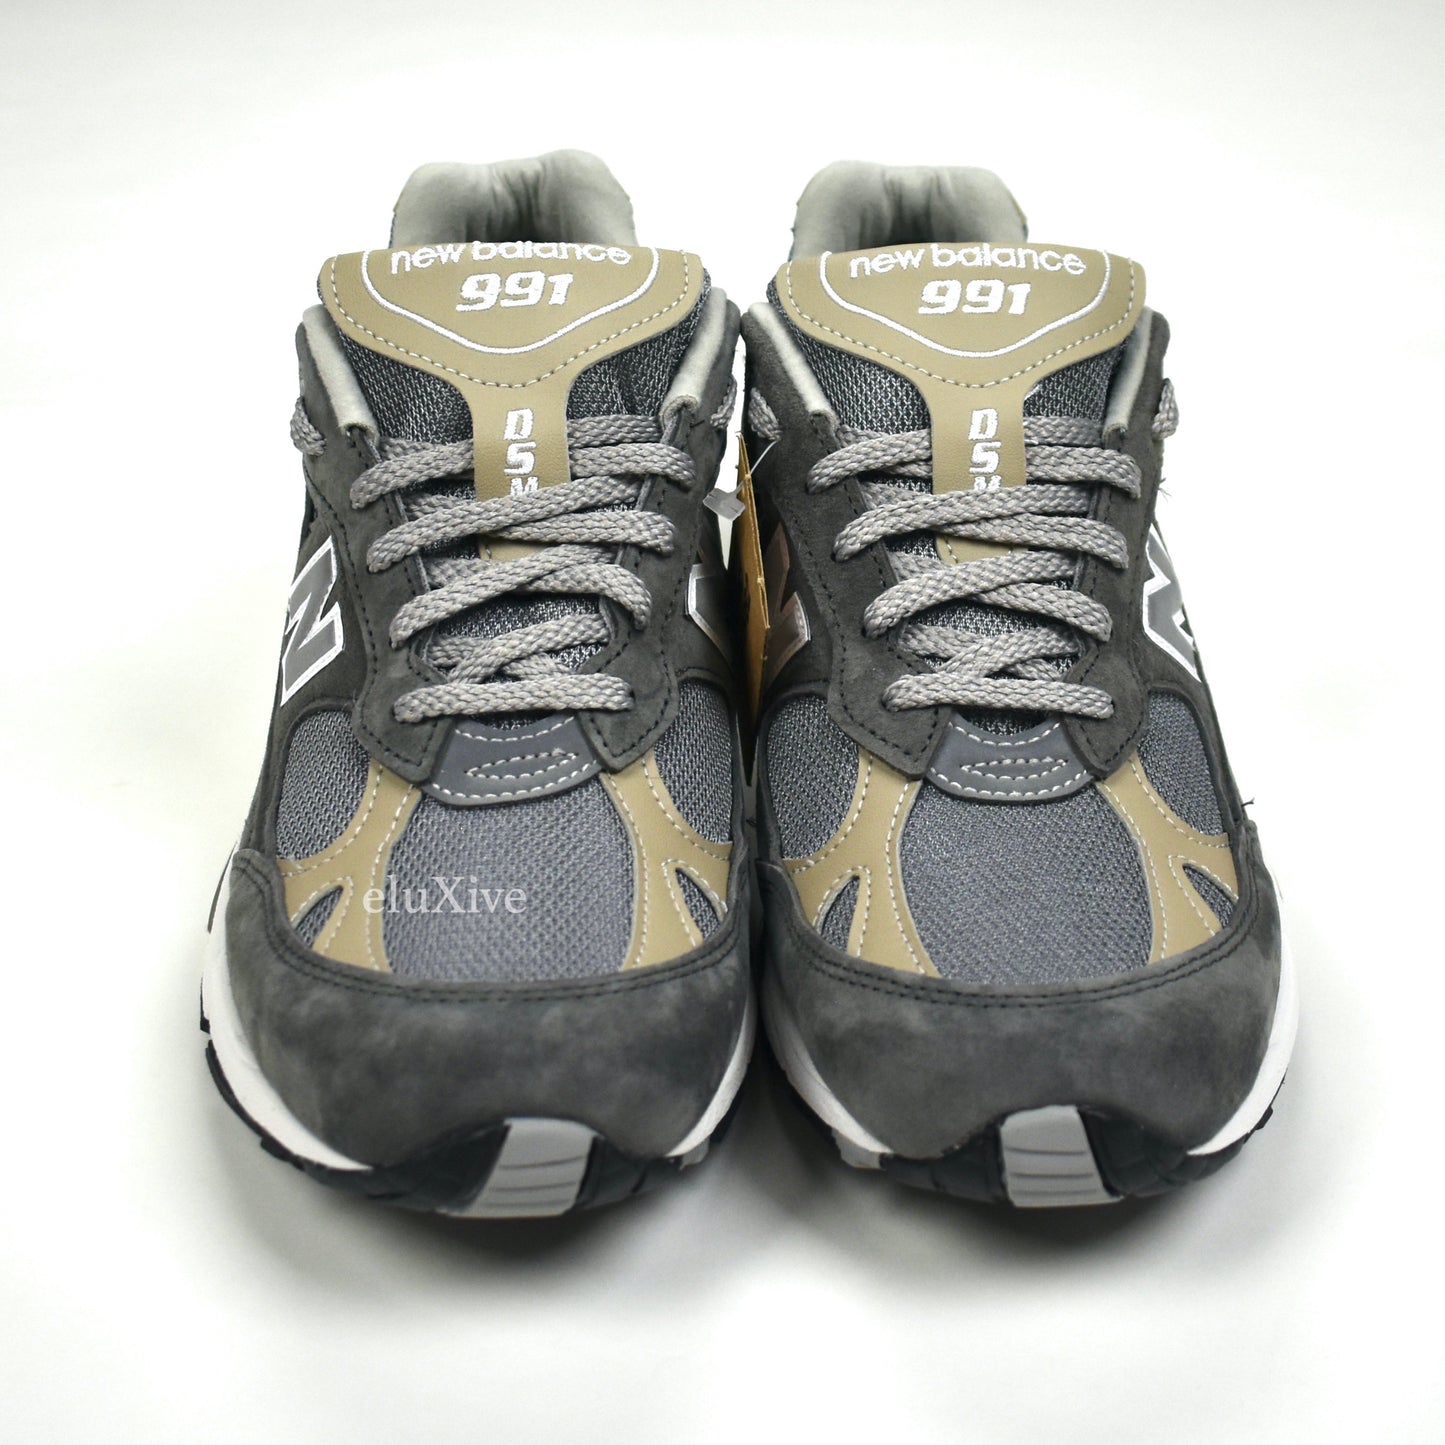 Nike x DSM - 991 Made In UK 40th Anniversary Sneakers (Gray)